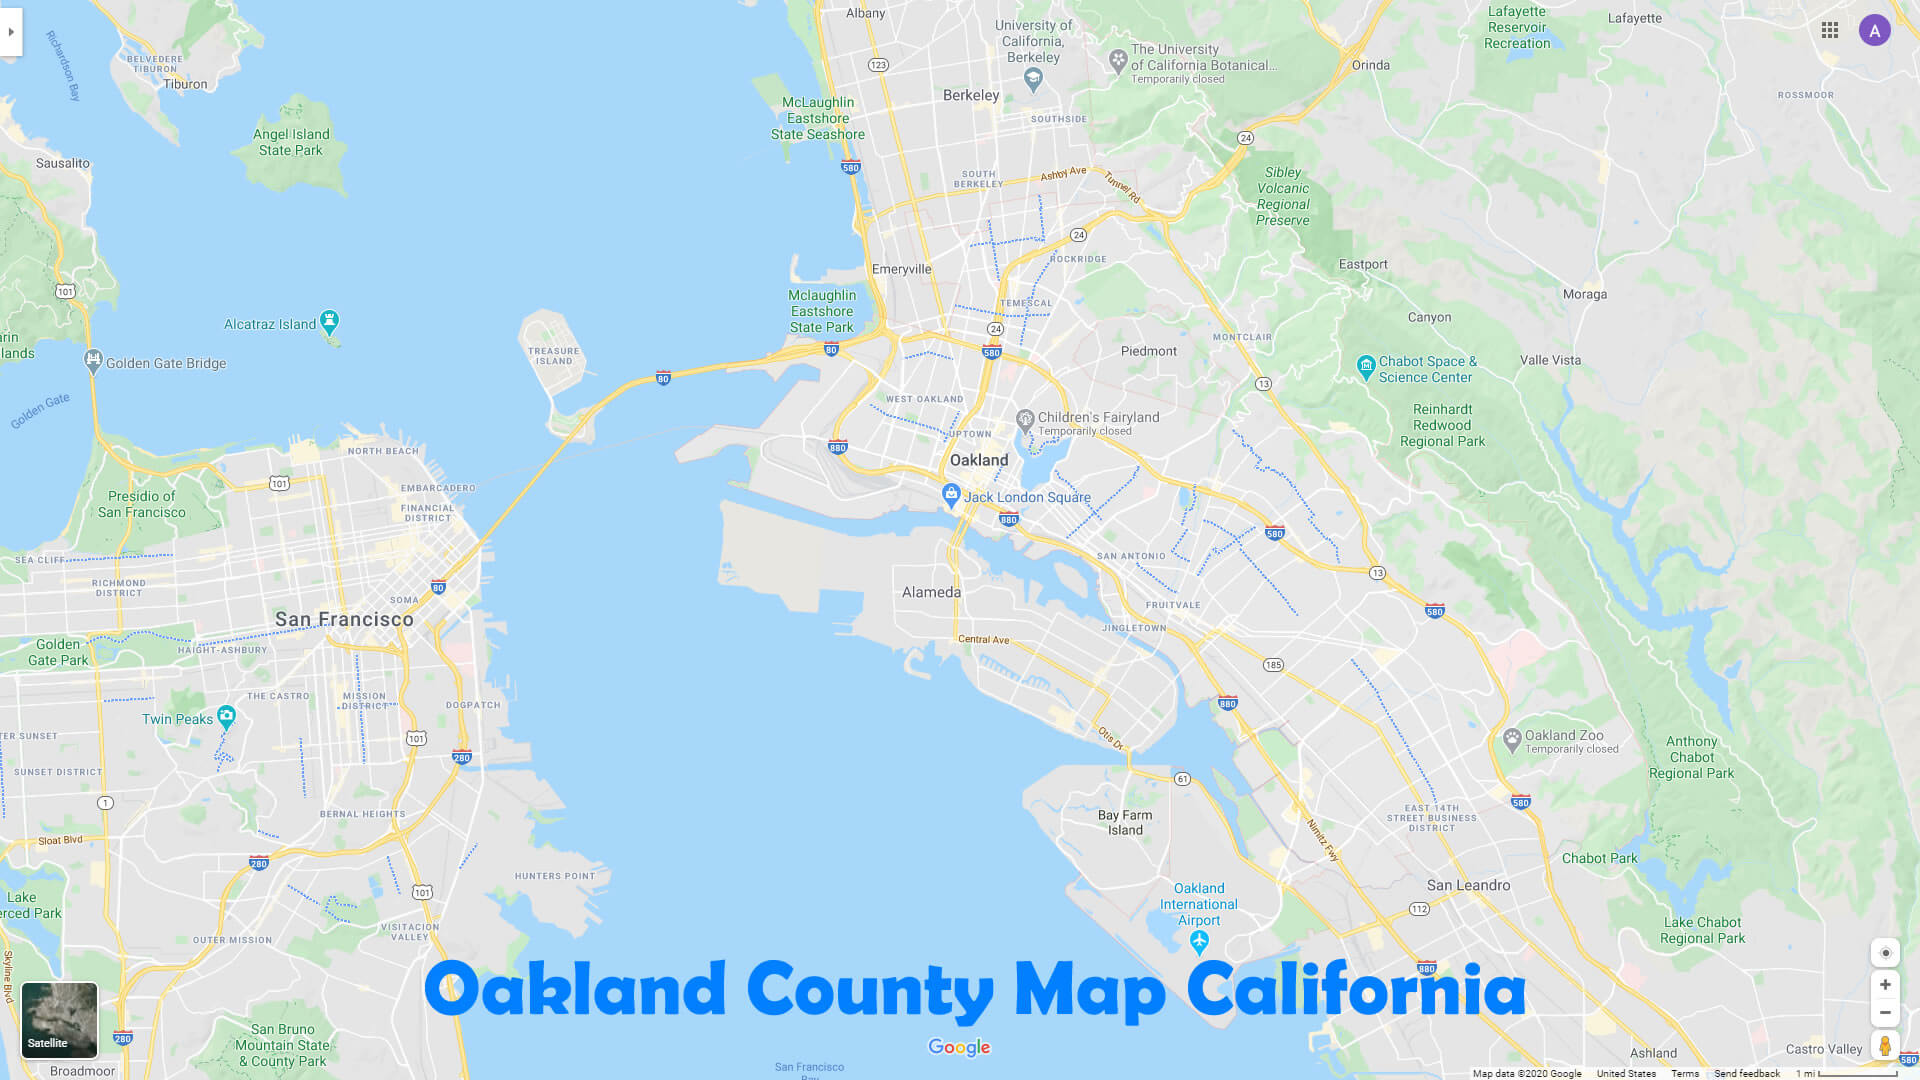 Oakland County Map California 